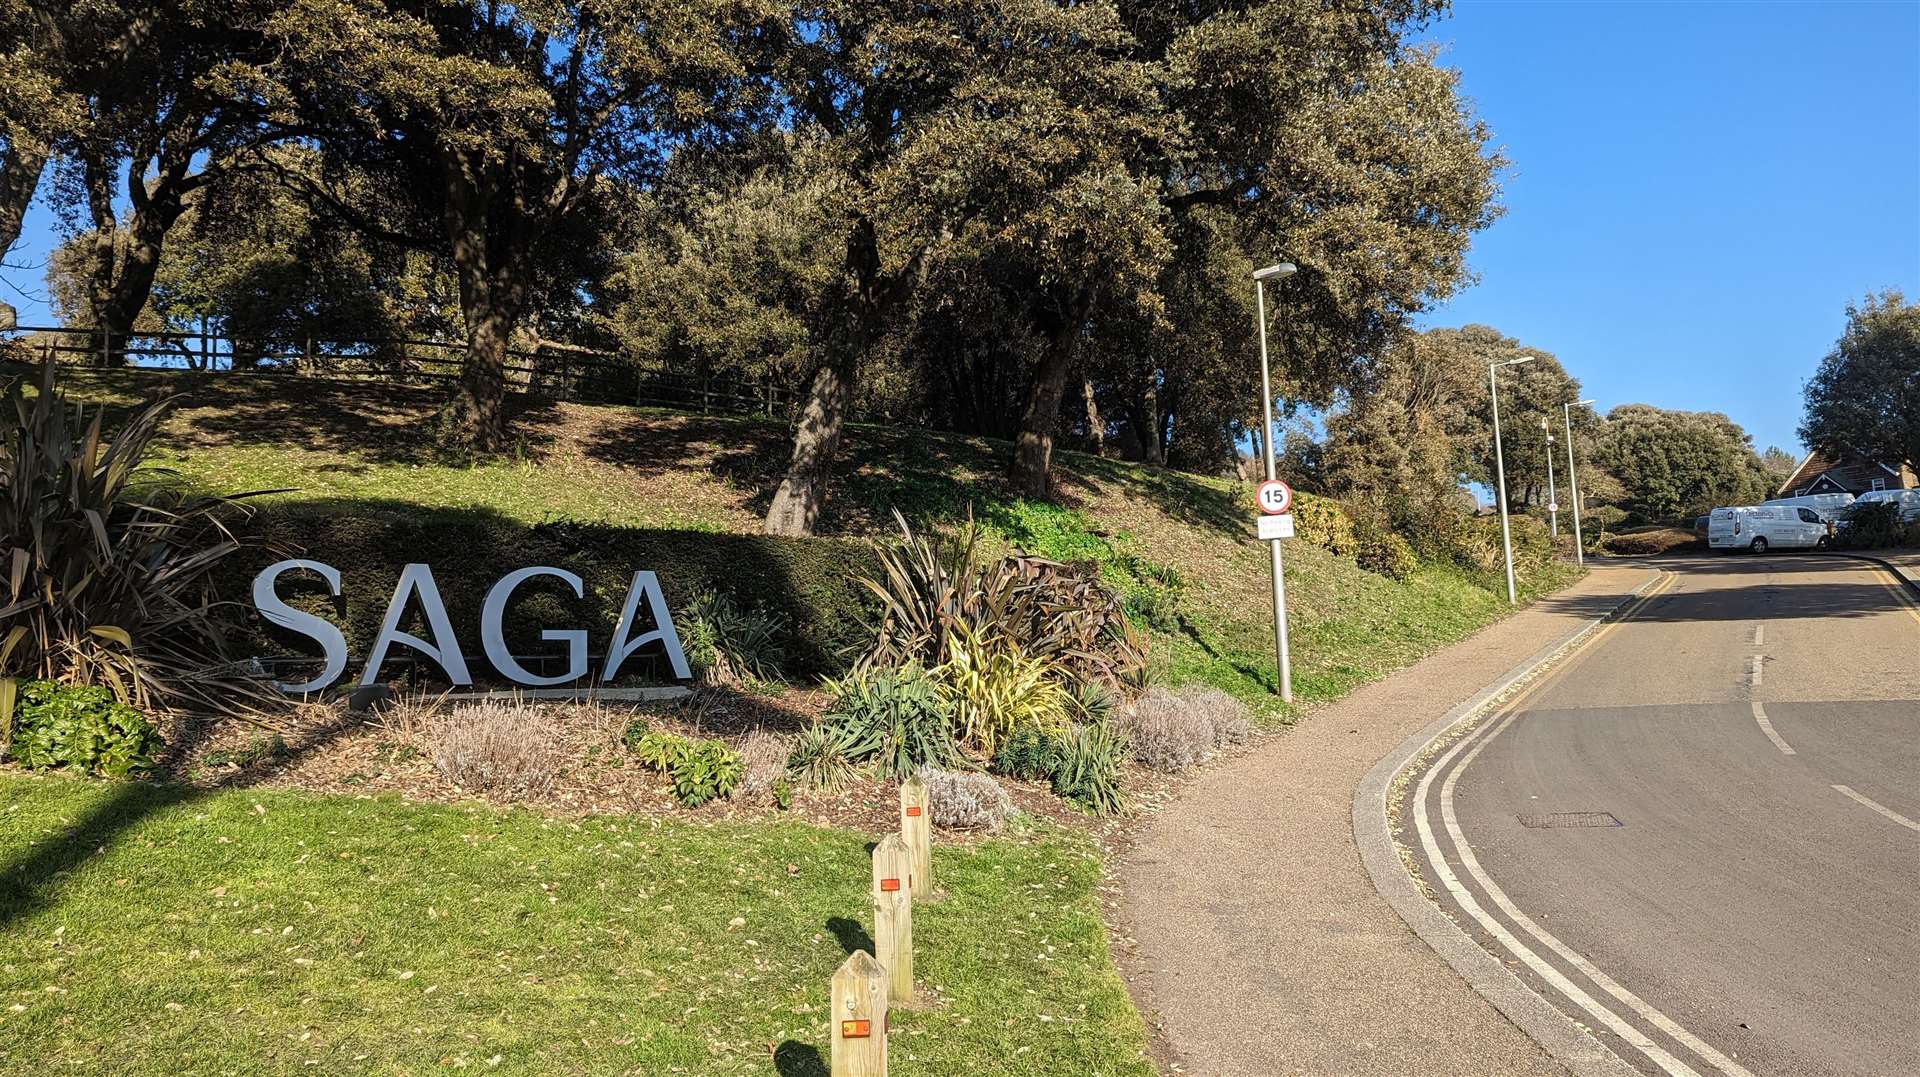 The links between Saga and Enbrook Park go back decades